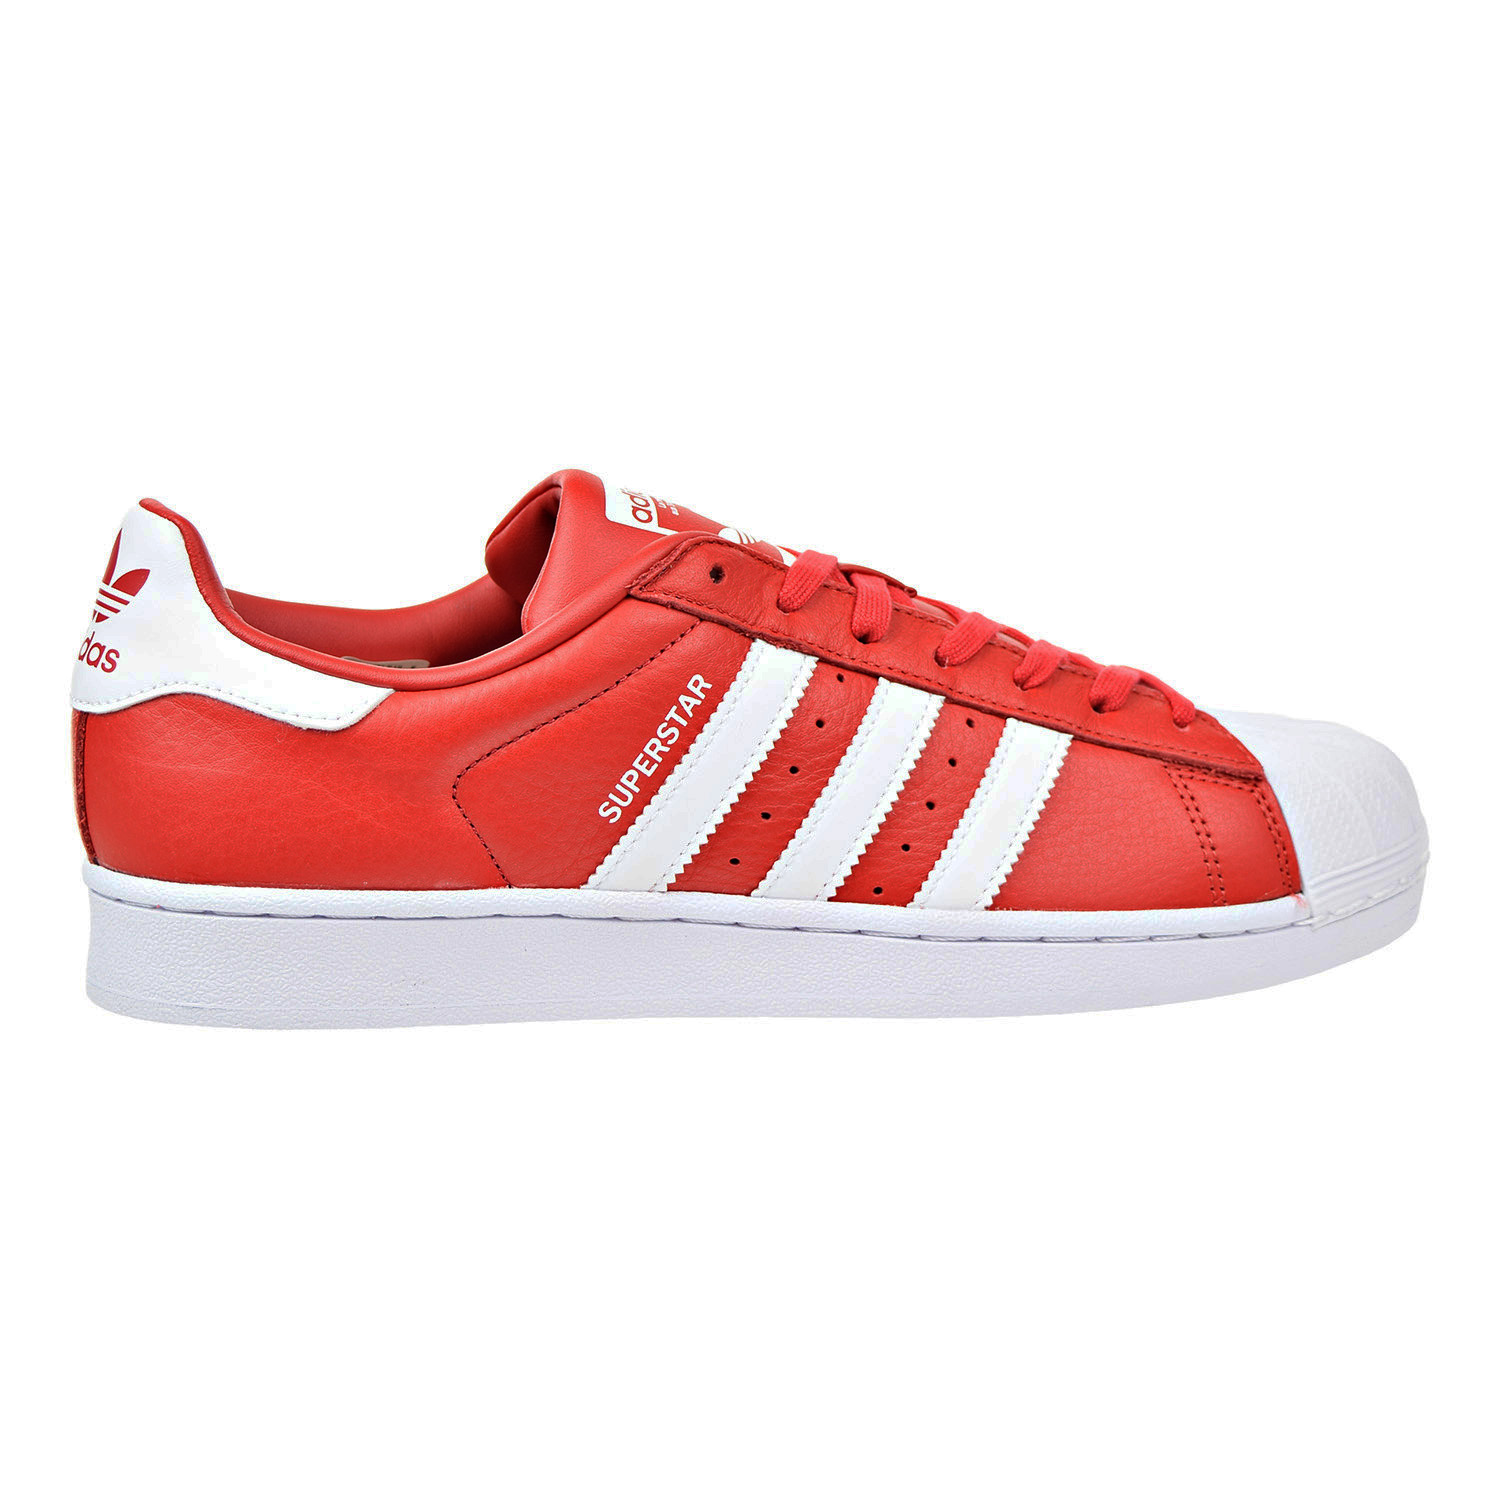 Adidas Originals Superstar Foundation Men's Shoes Red/Footwear White ...